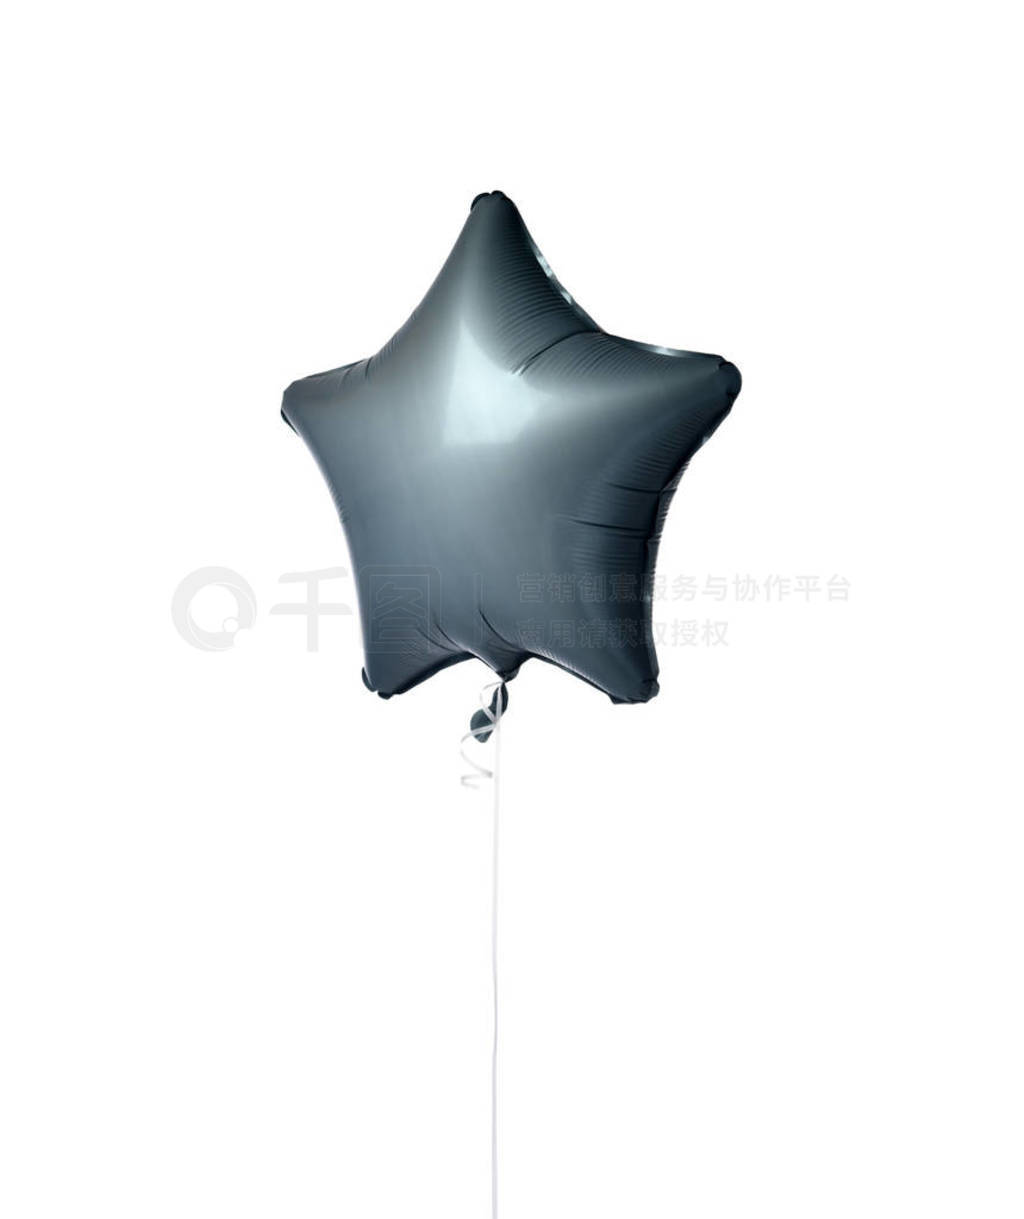 Big gray metallic latex star balloon for birthday party isolated